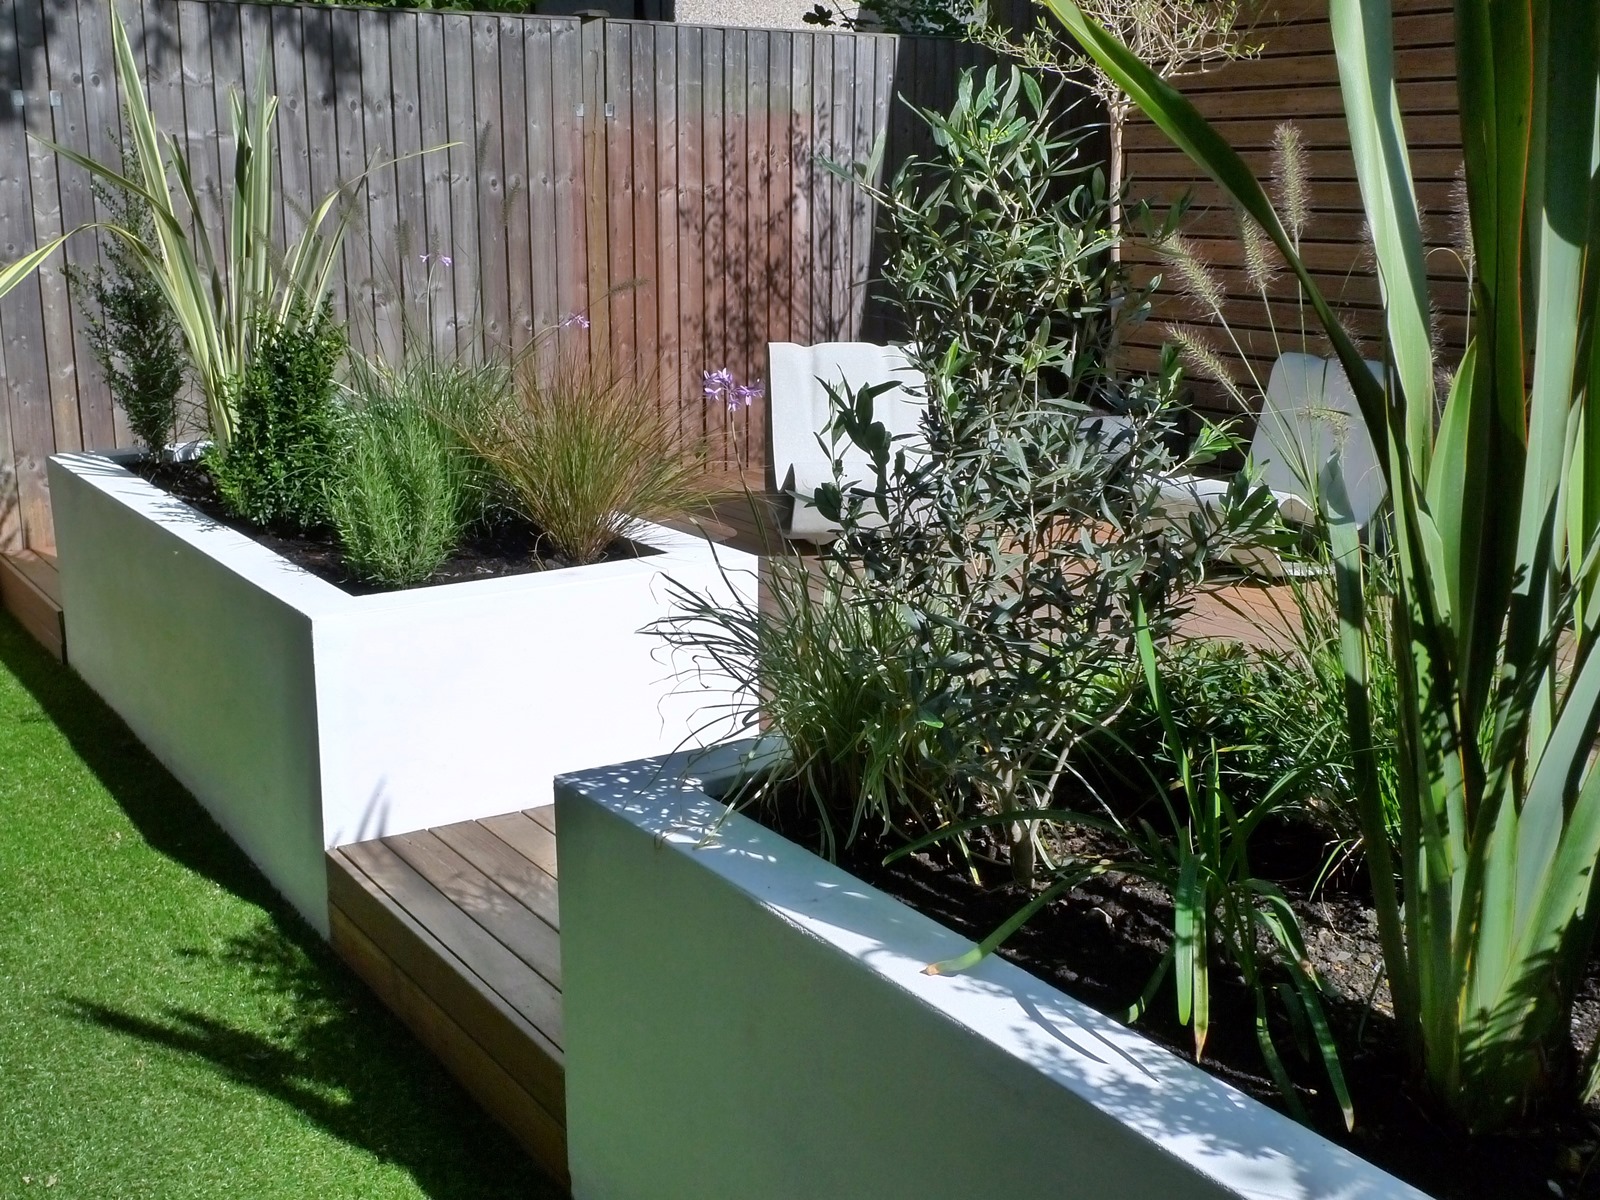 clapham and balham modern garden design decking planting artificial lawn grass hardwood privacy screen indoor outdoor space (14)